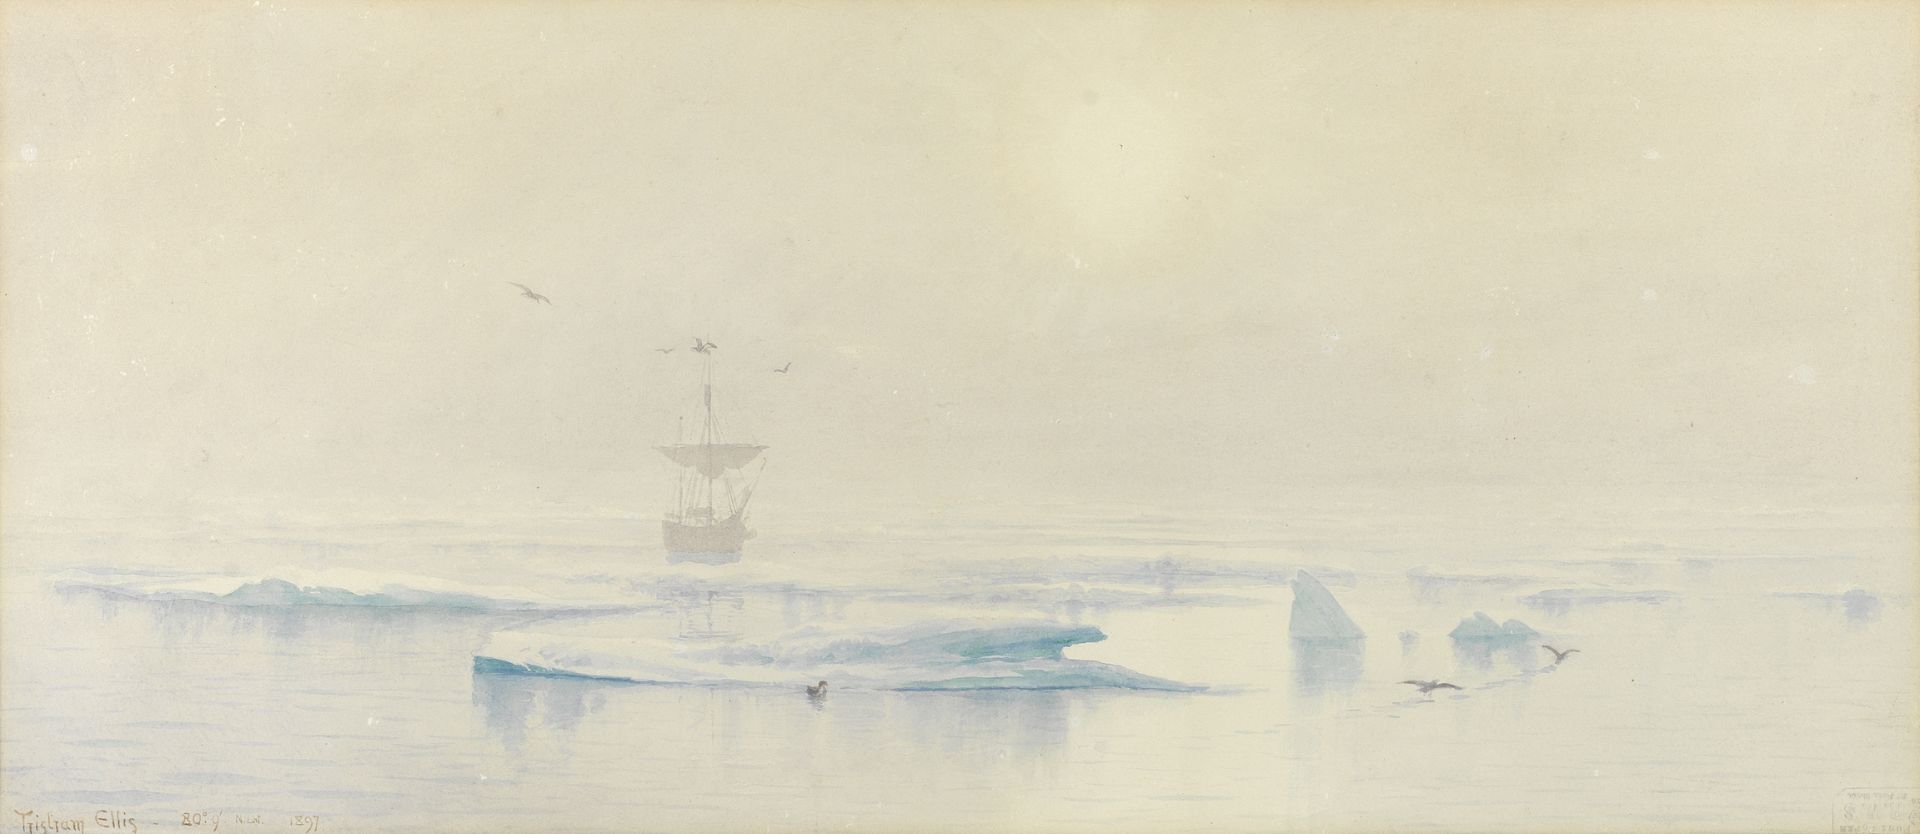 Tristram Ellis (British, 1844-1922) On the edge of the Polar ice pack